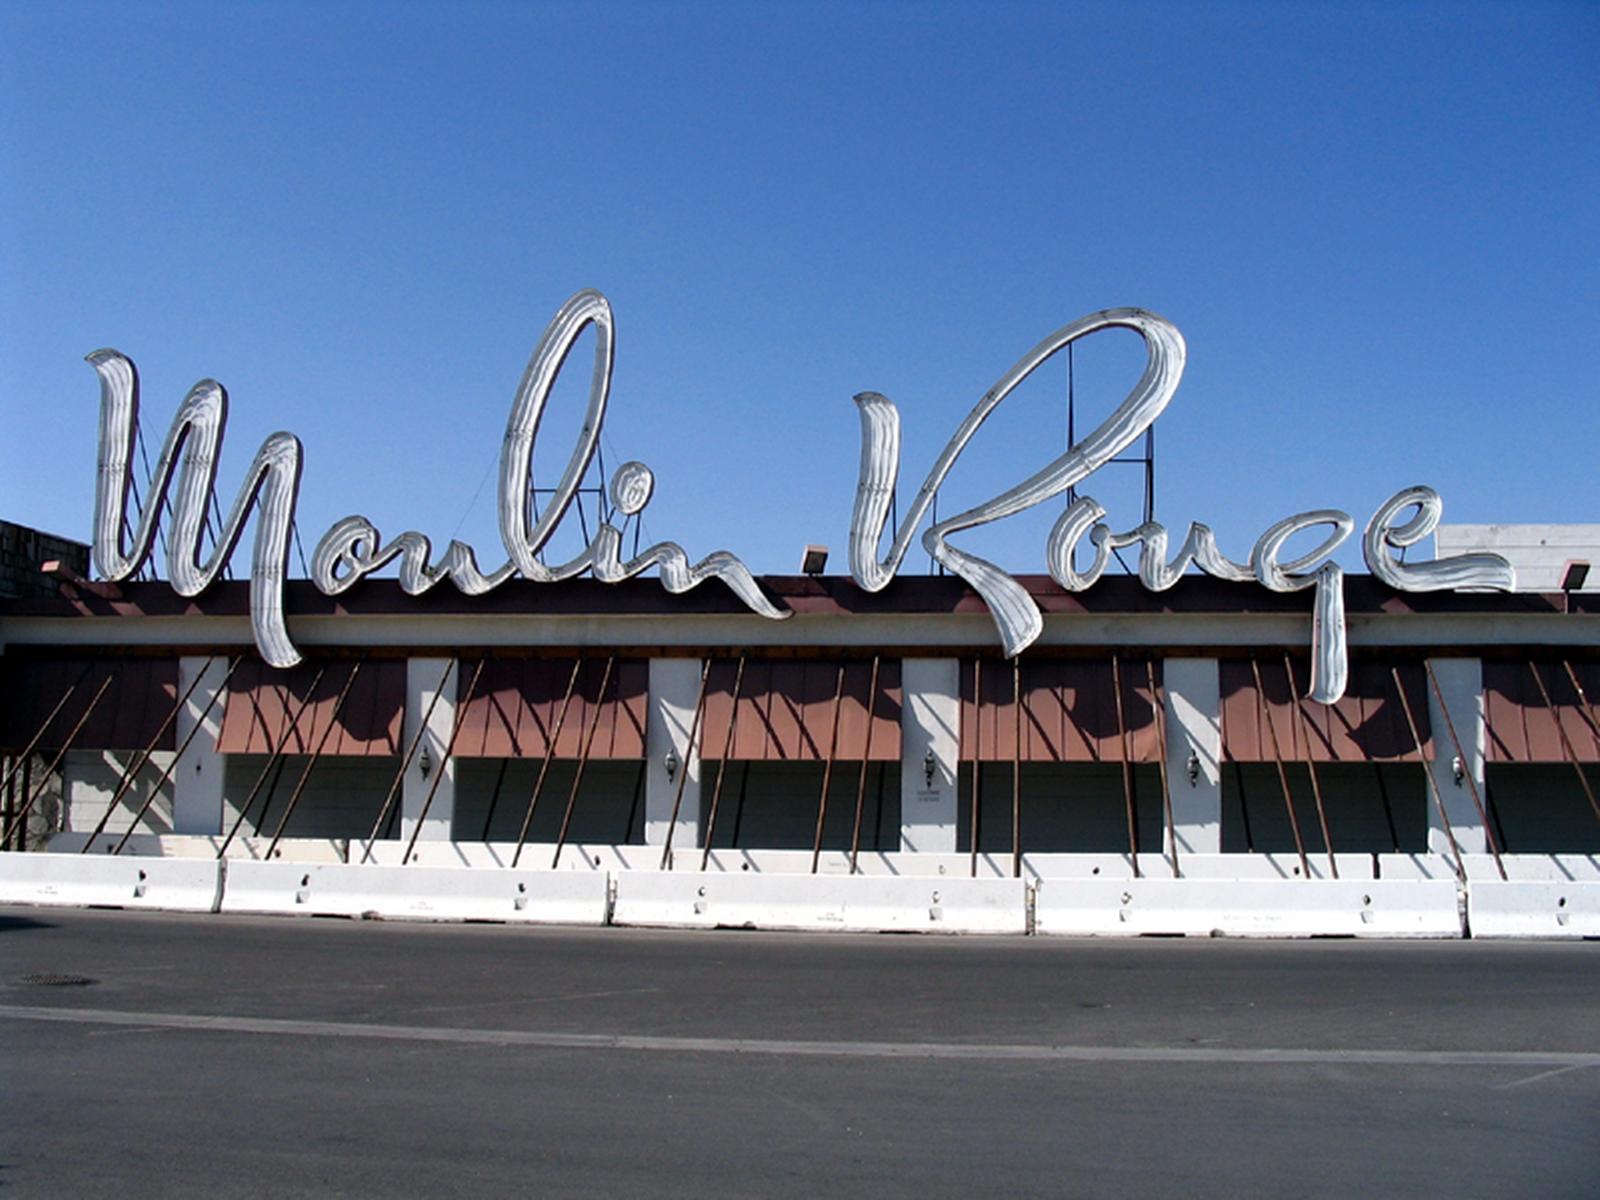 Moulin Rouge Casino|Google Maps Las Vegas Strip|Marlene Dietrich|Sammy Davis Jr.|Google Maps Las Vegas Strip